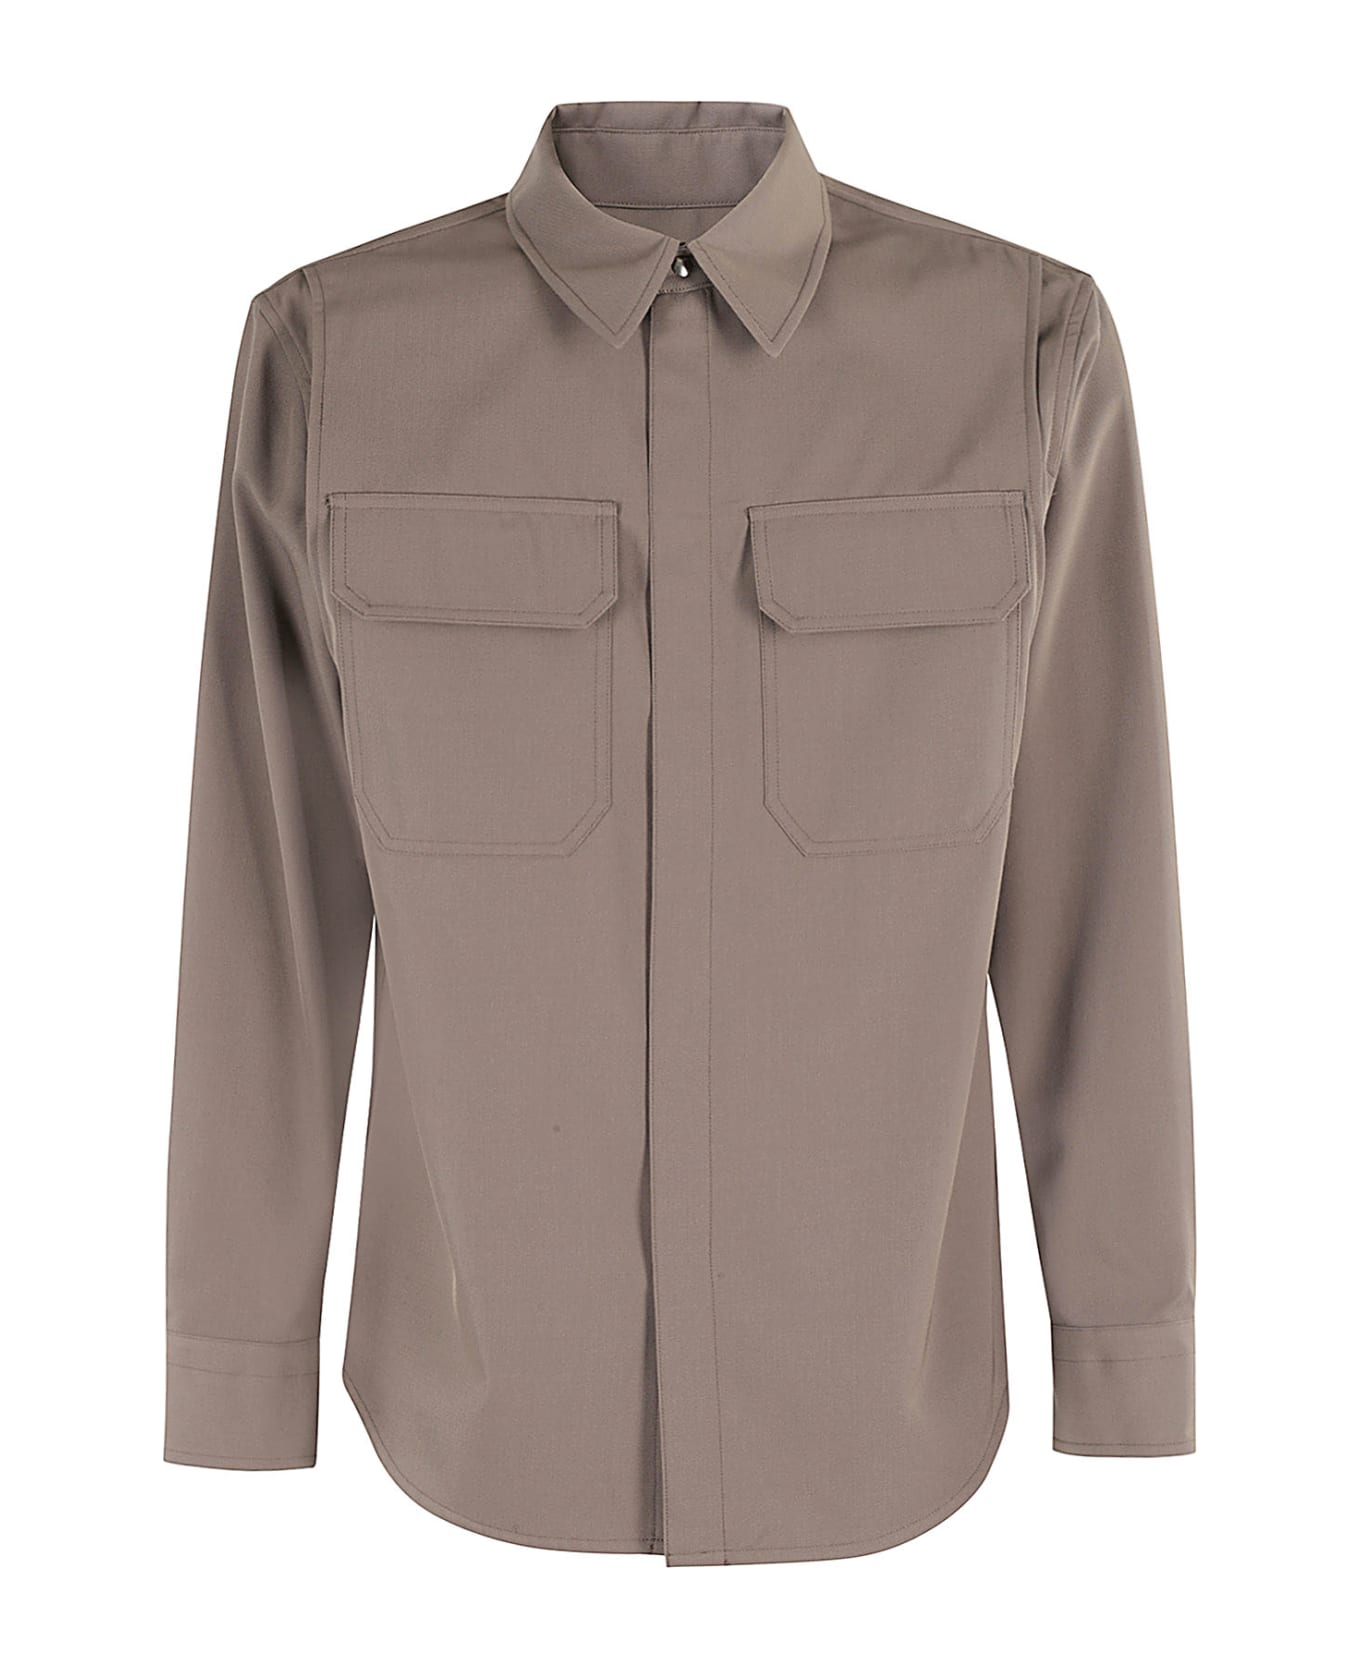 Helmut Lang Military Shirt - Cobblestone シャツ